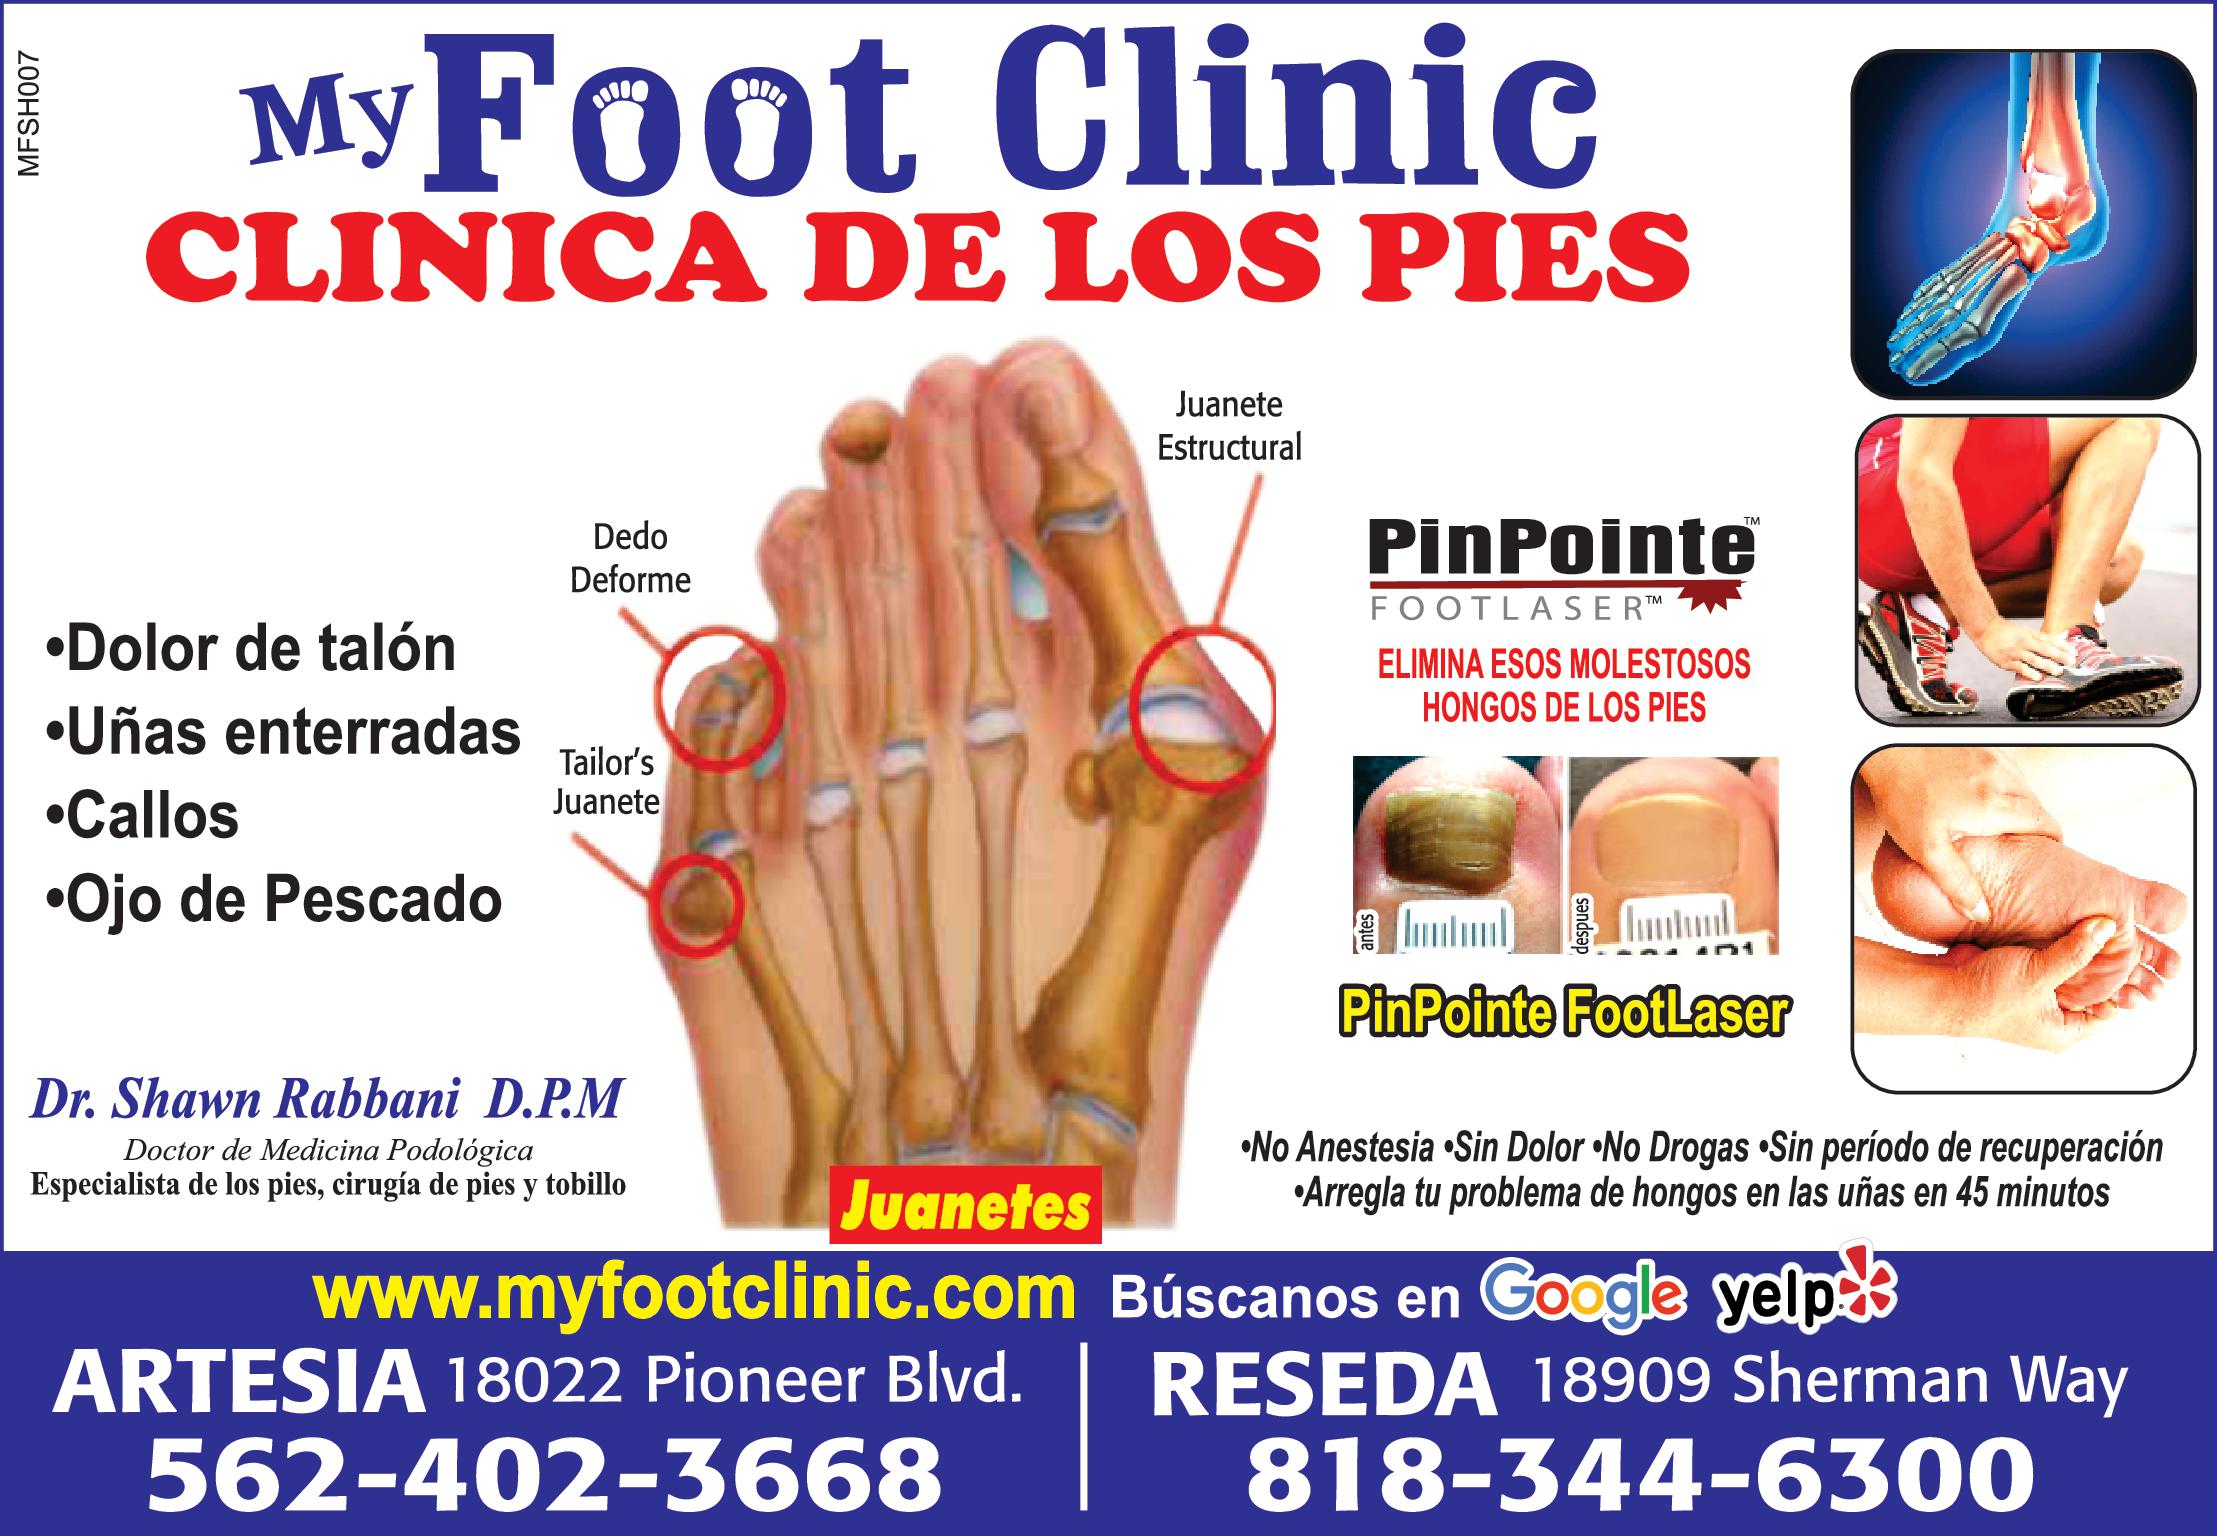 My Foot Clinic Dr. Shawn Rabbani